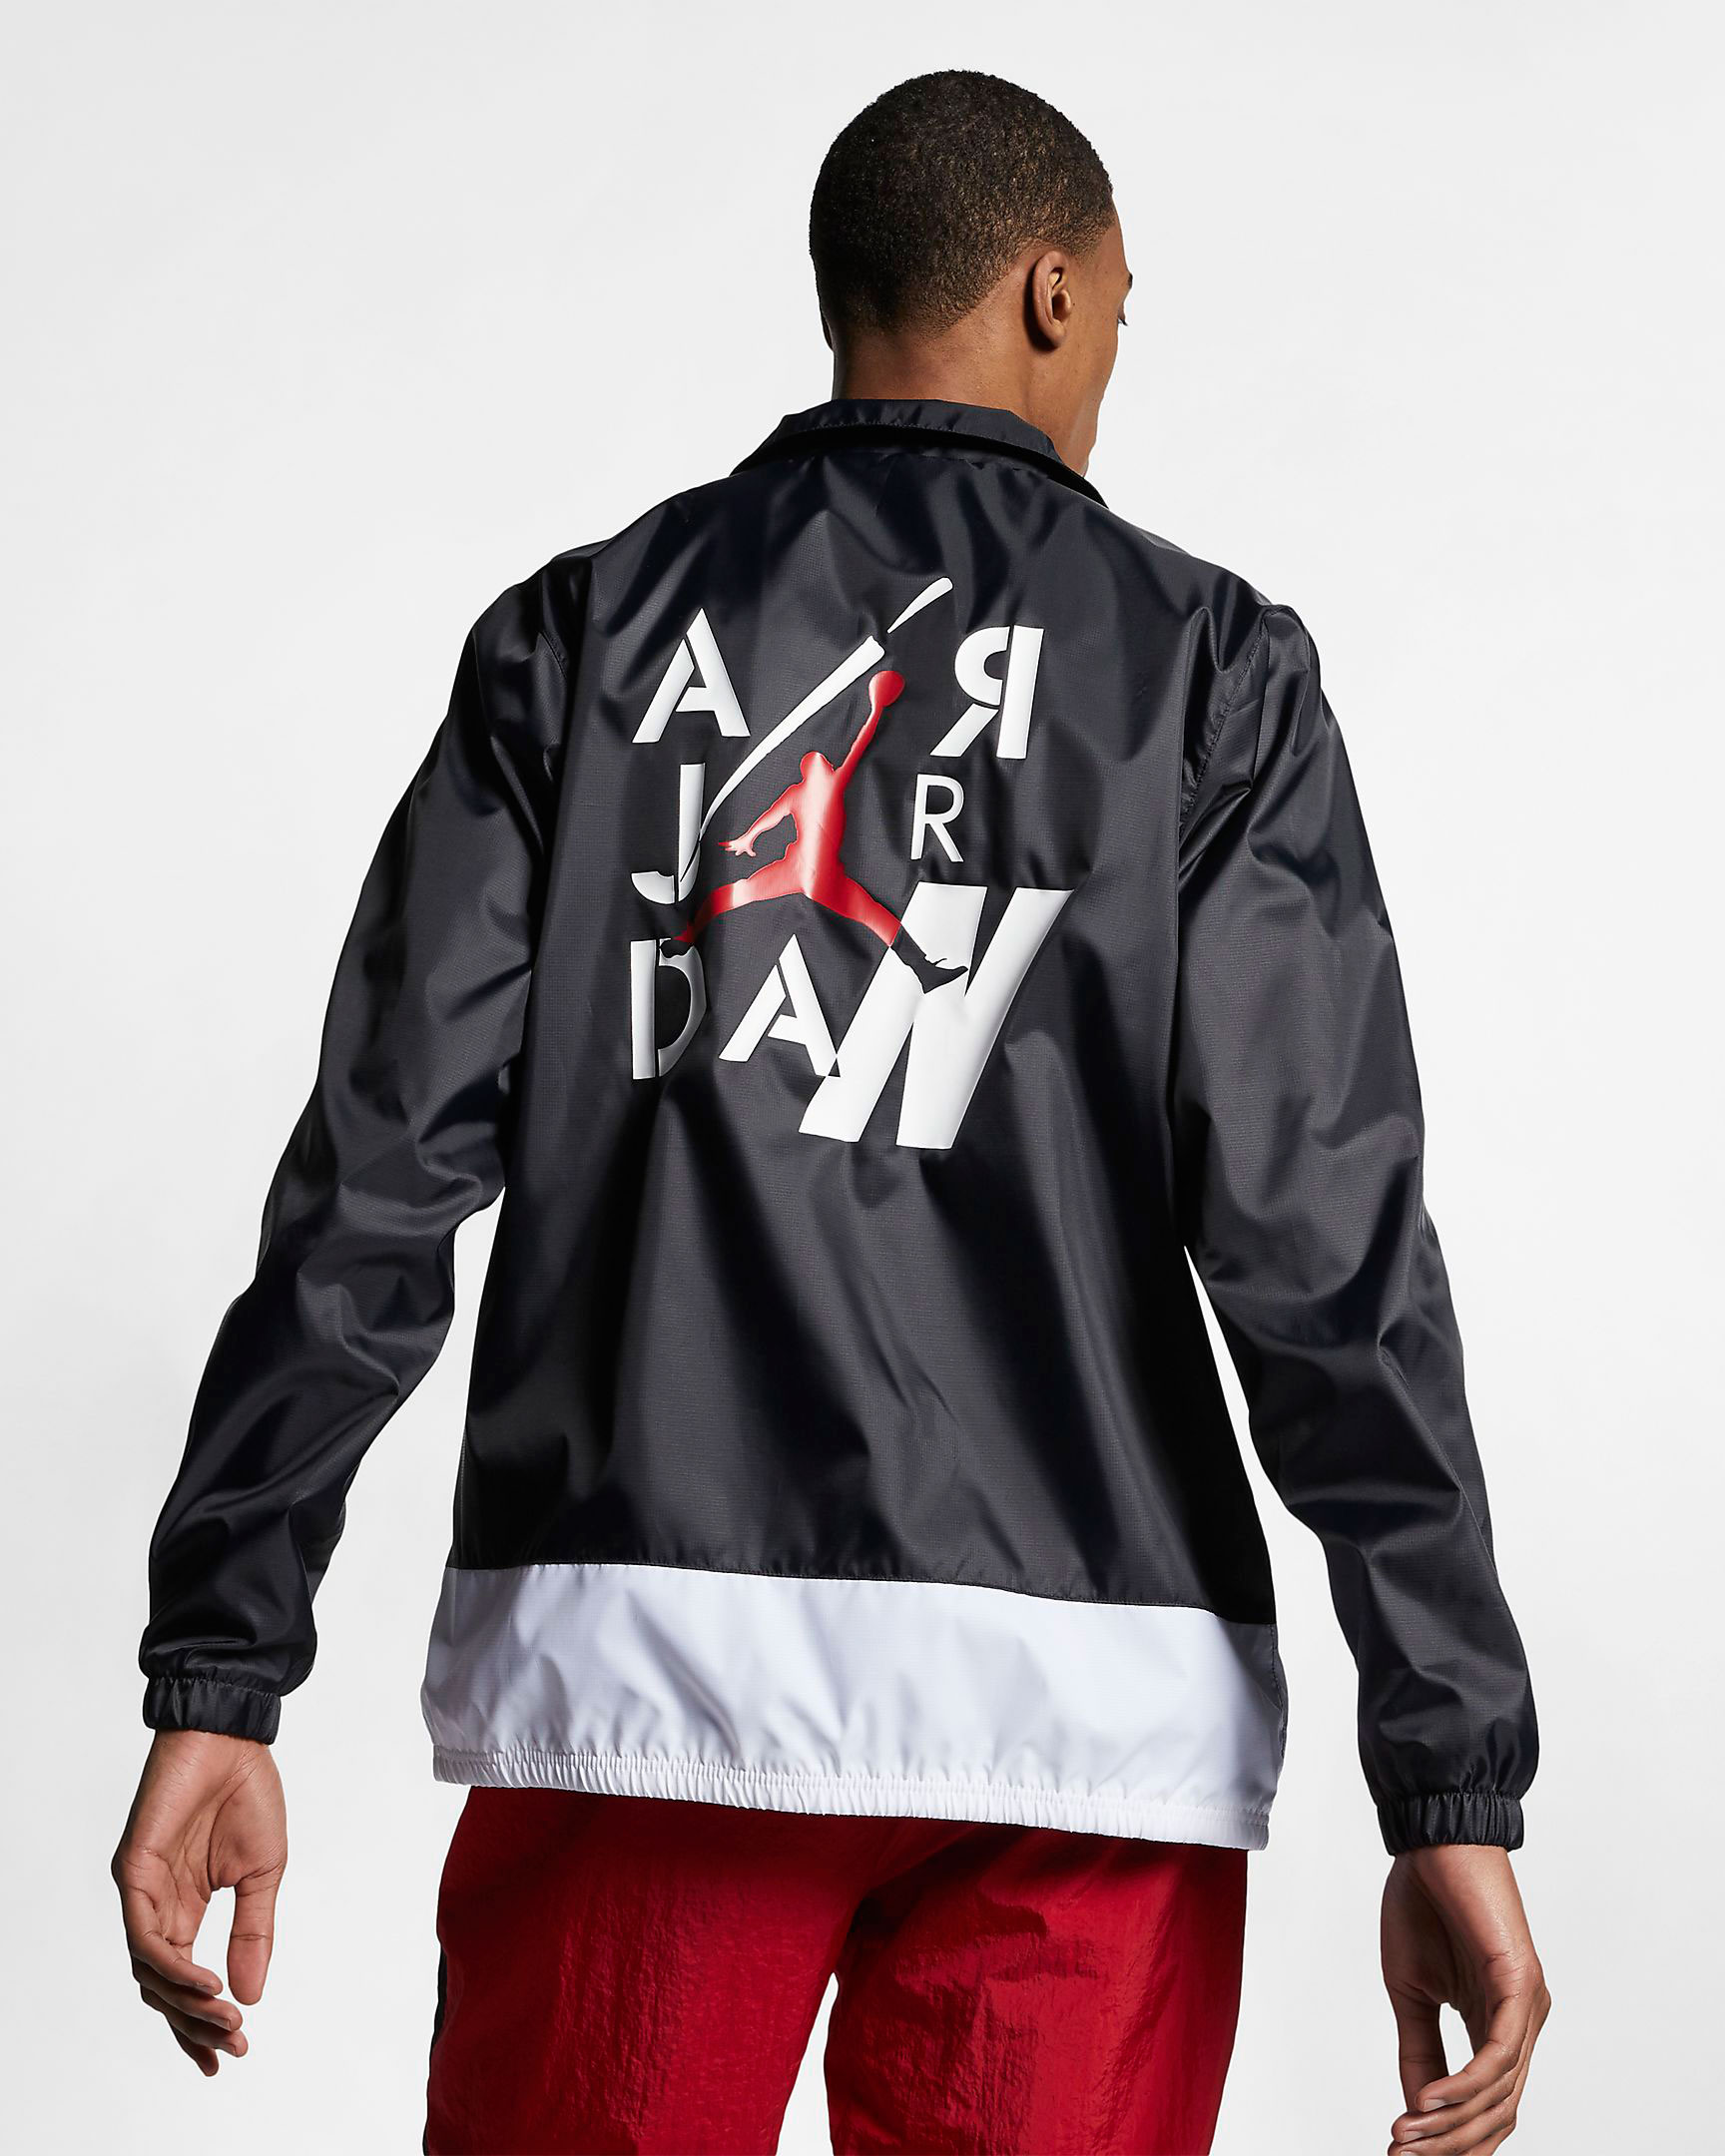 Men's Clothing Breakfast, Air Jordan 4 Bred 2019 x Jordan Legacy AJ 4  Coaches Jacket